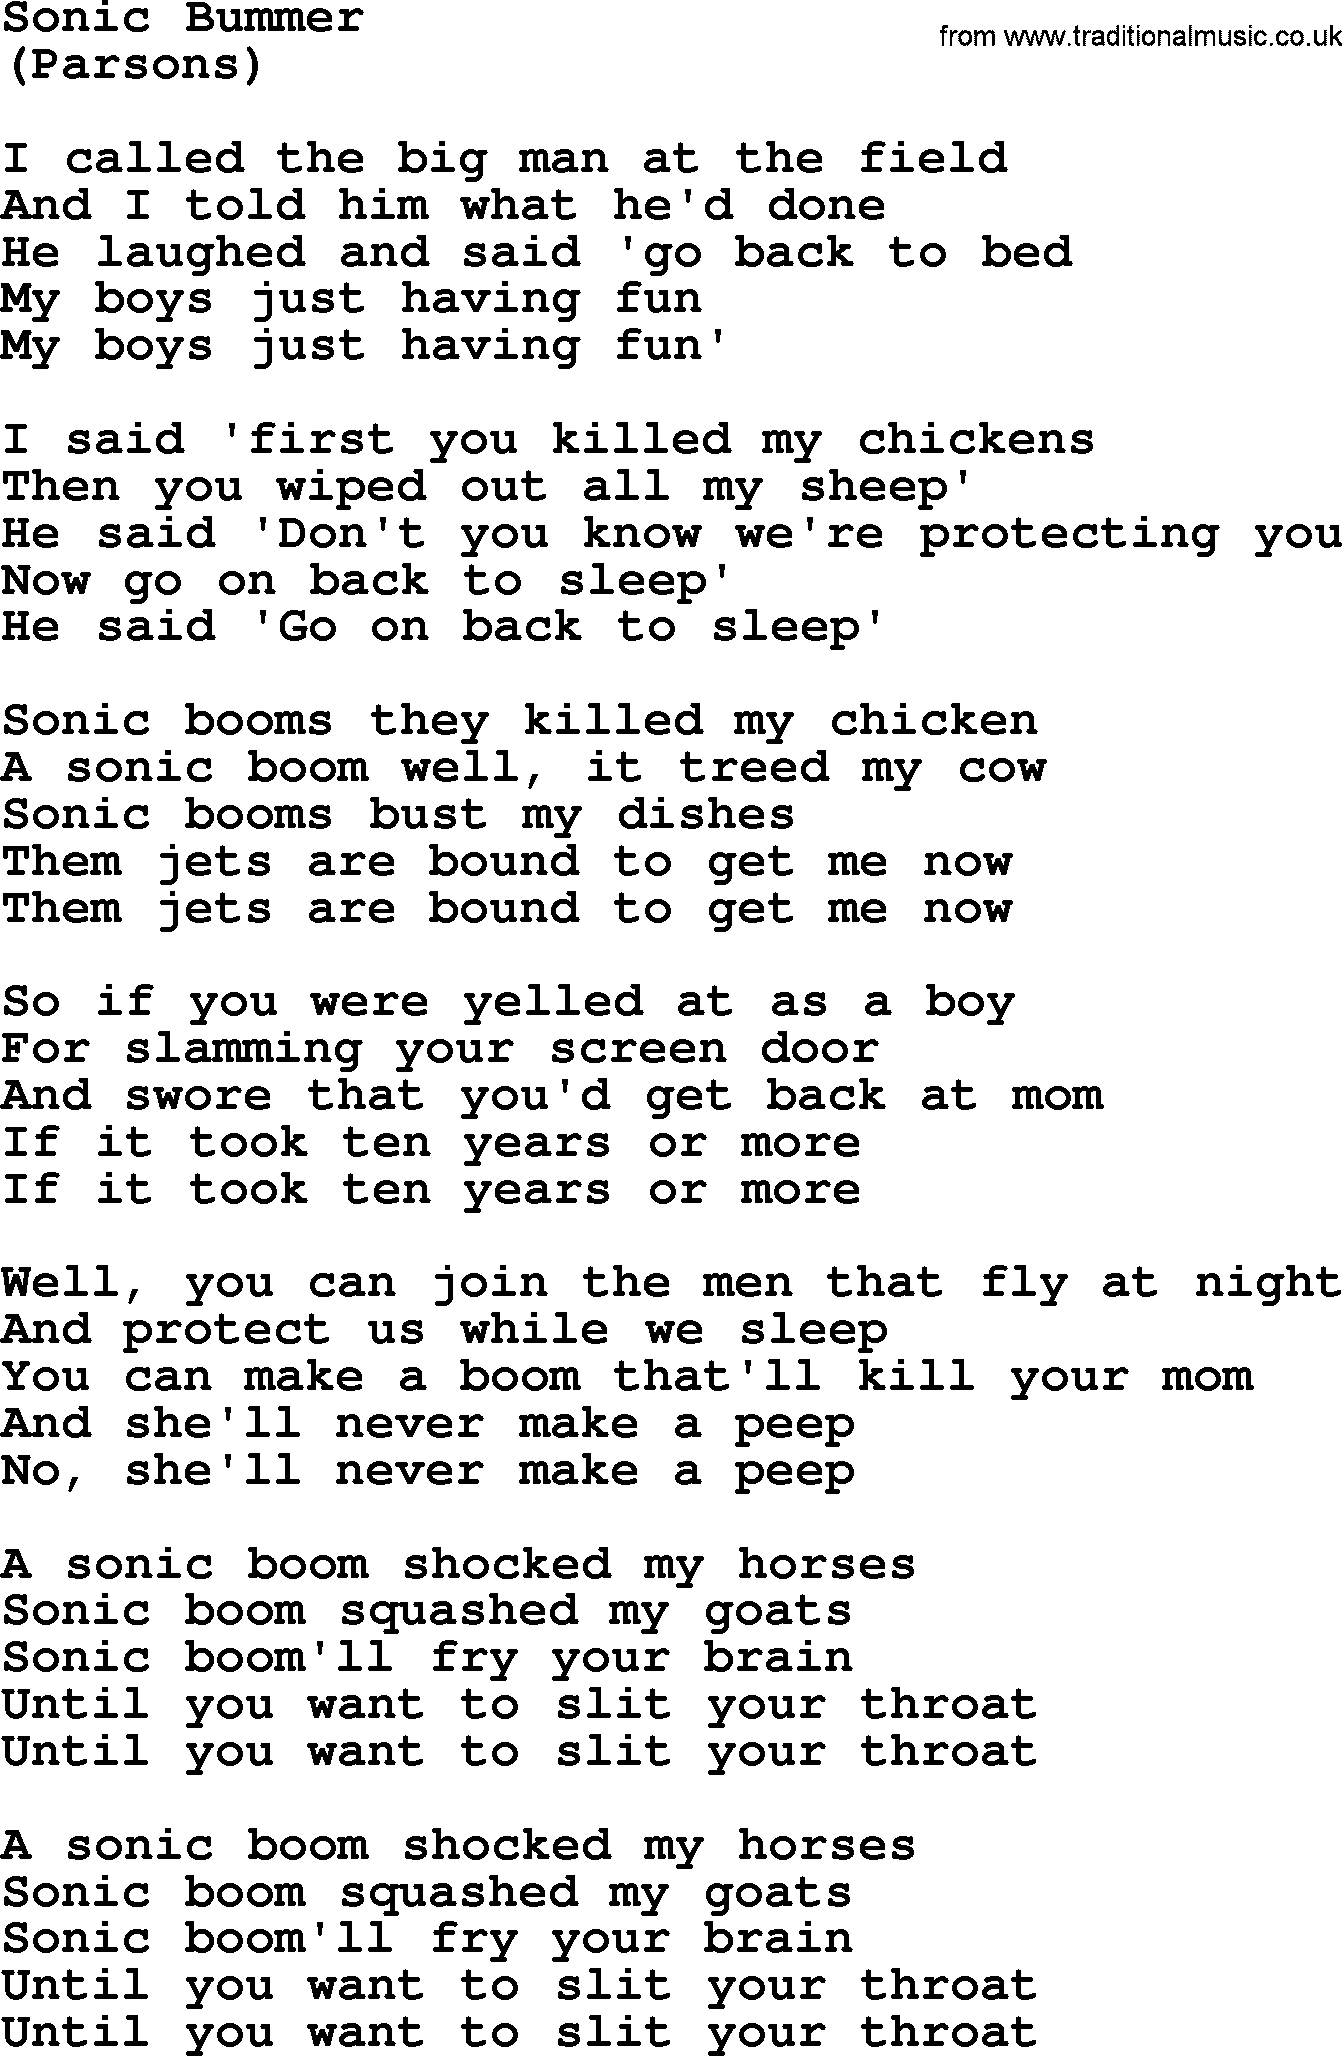 The Byrds song Sonic Bummer, lyrics